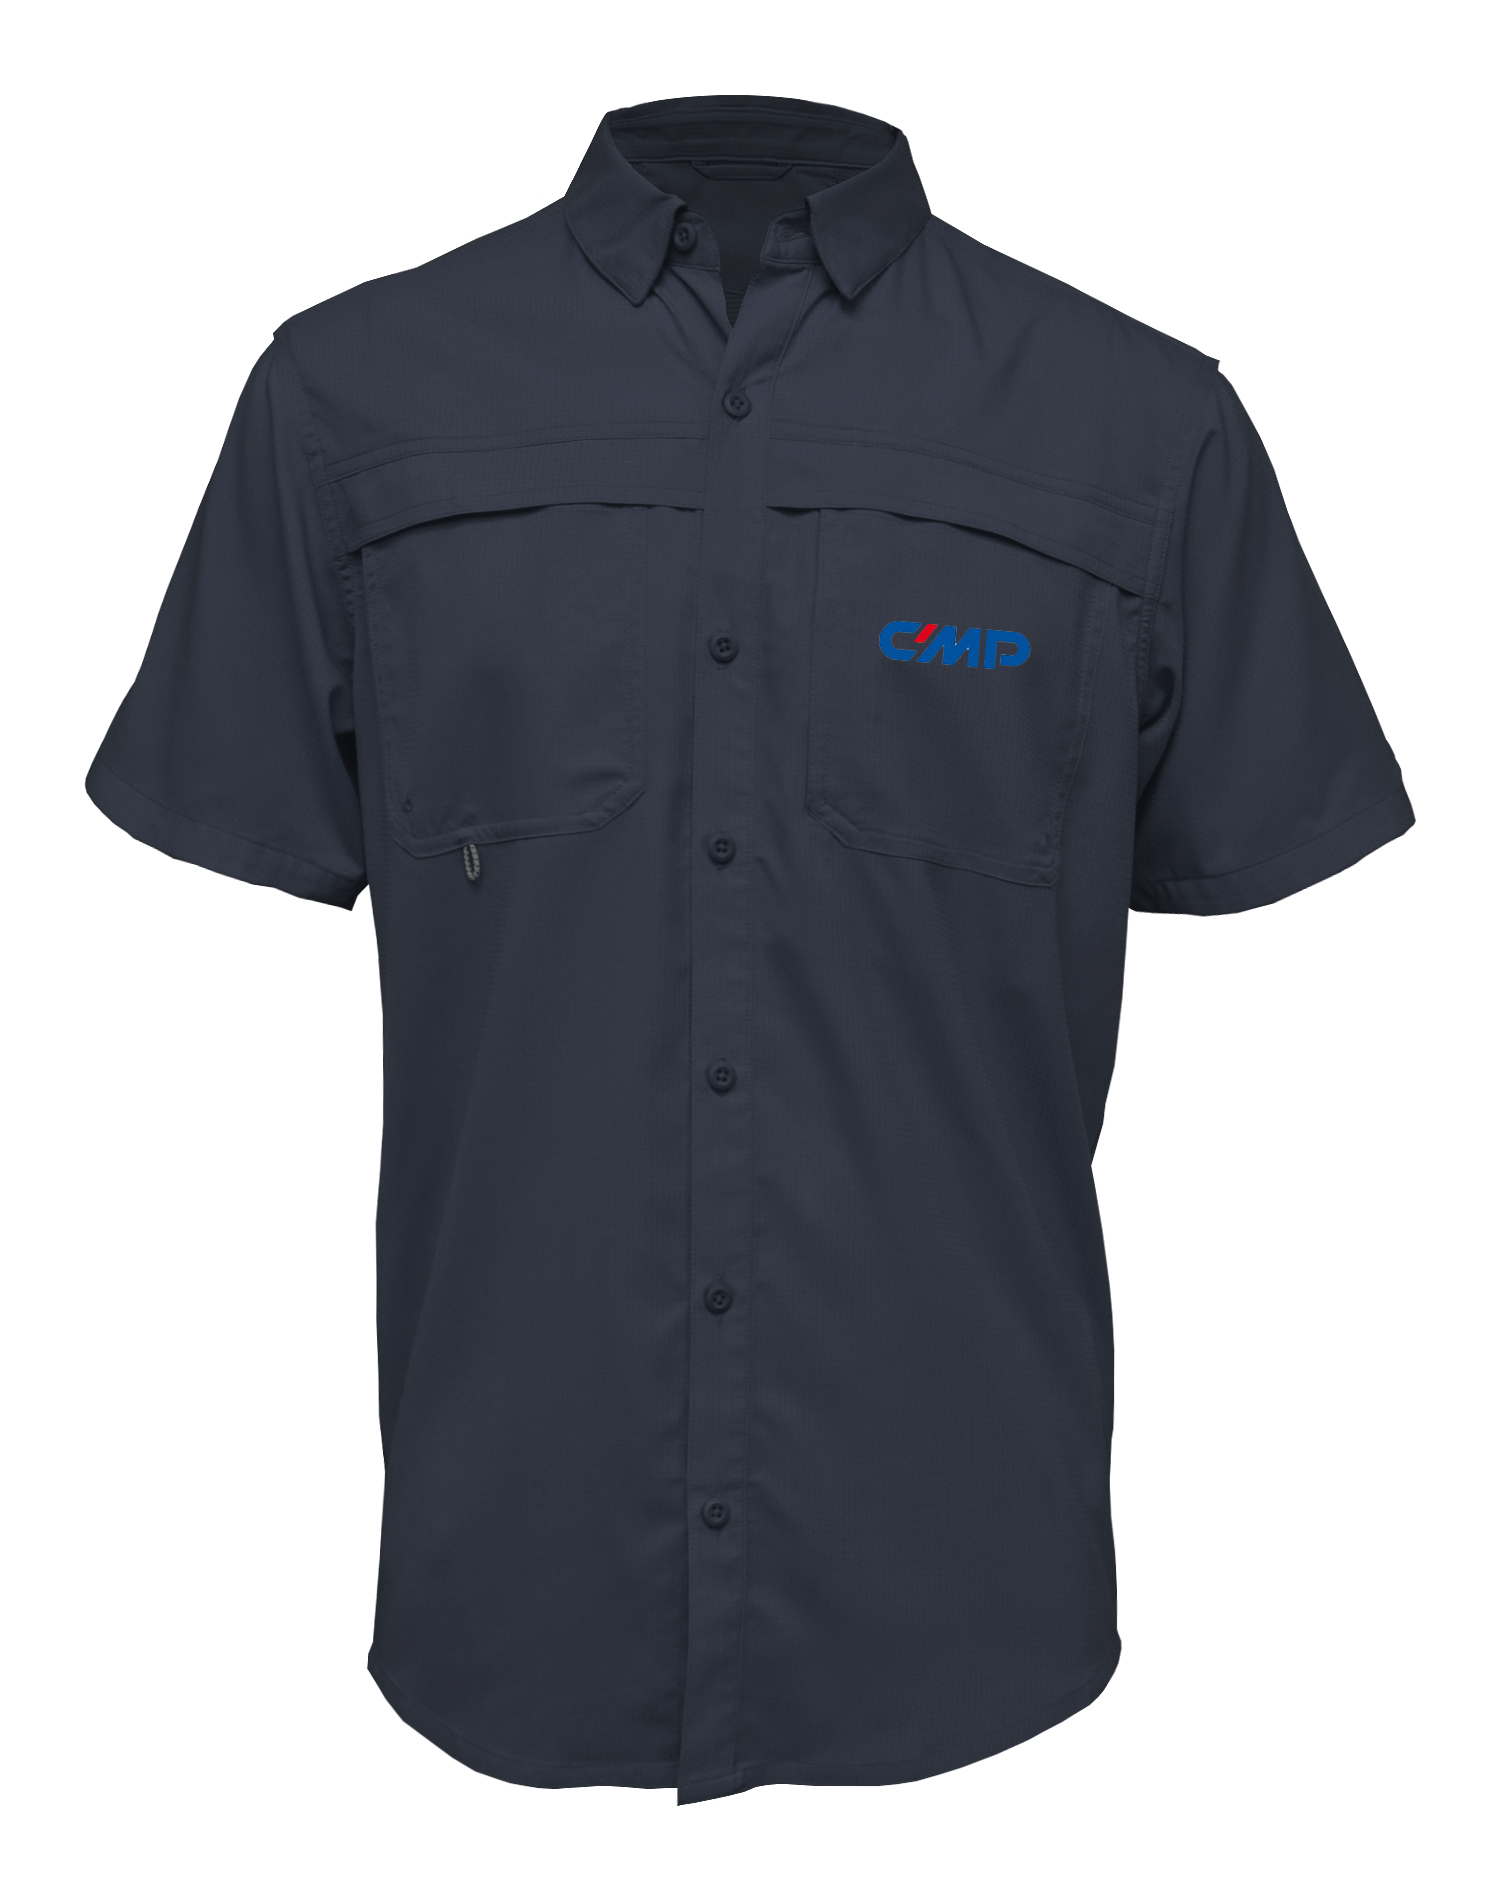 BAW Athletic Wear 3100 - Adult Short Sleeve Fishing Shirt